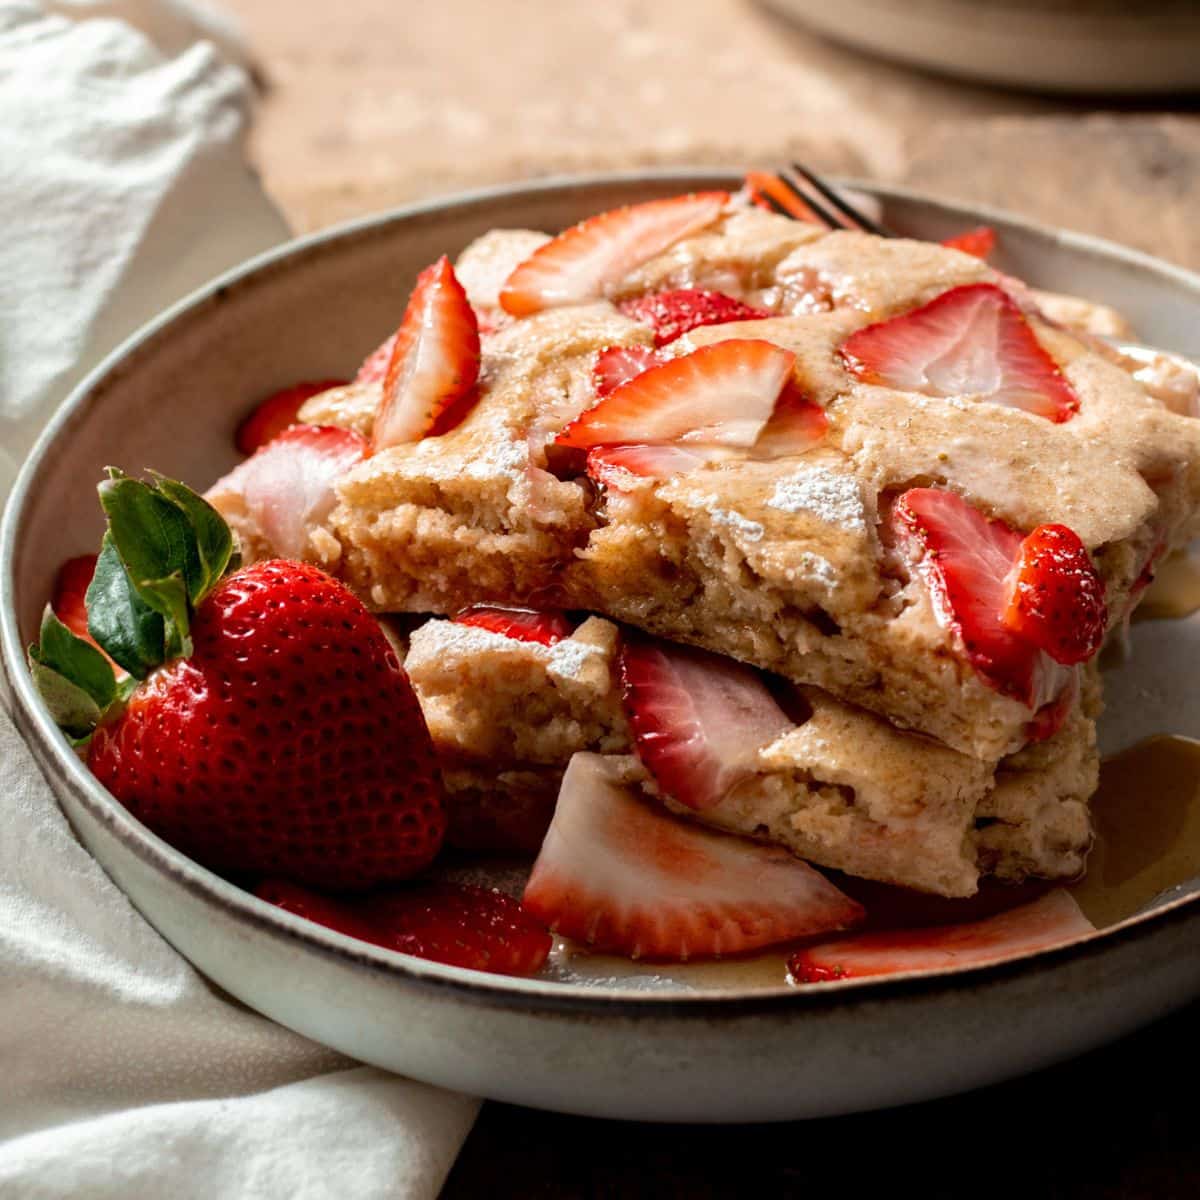 Sheet Pan Strawberry Pancakes (Gluten-Free) - Eat Yourself Skinny